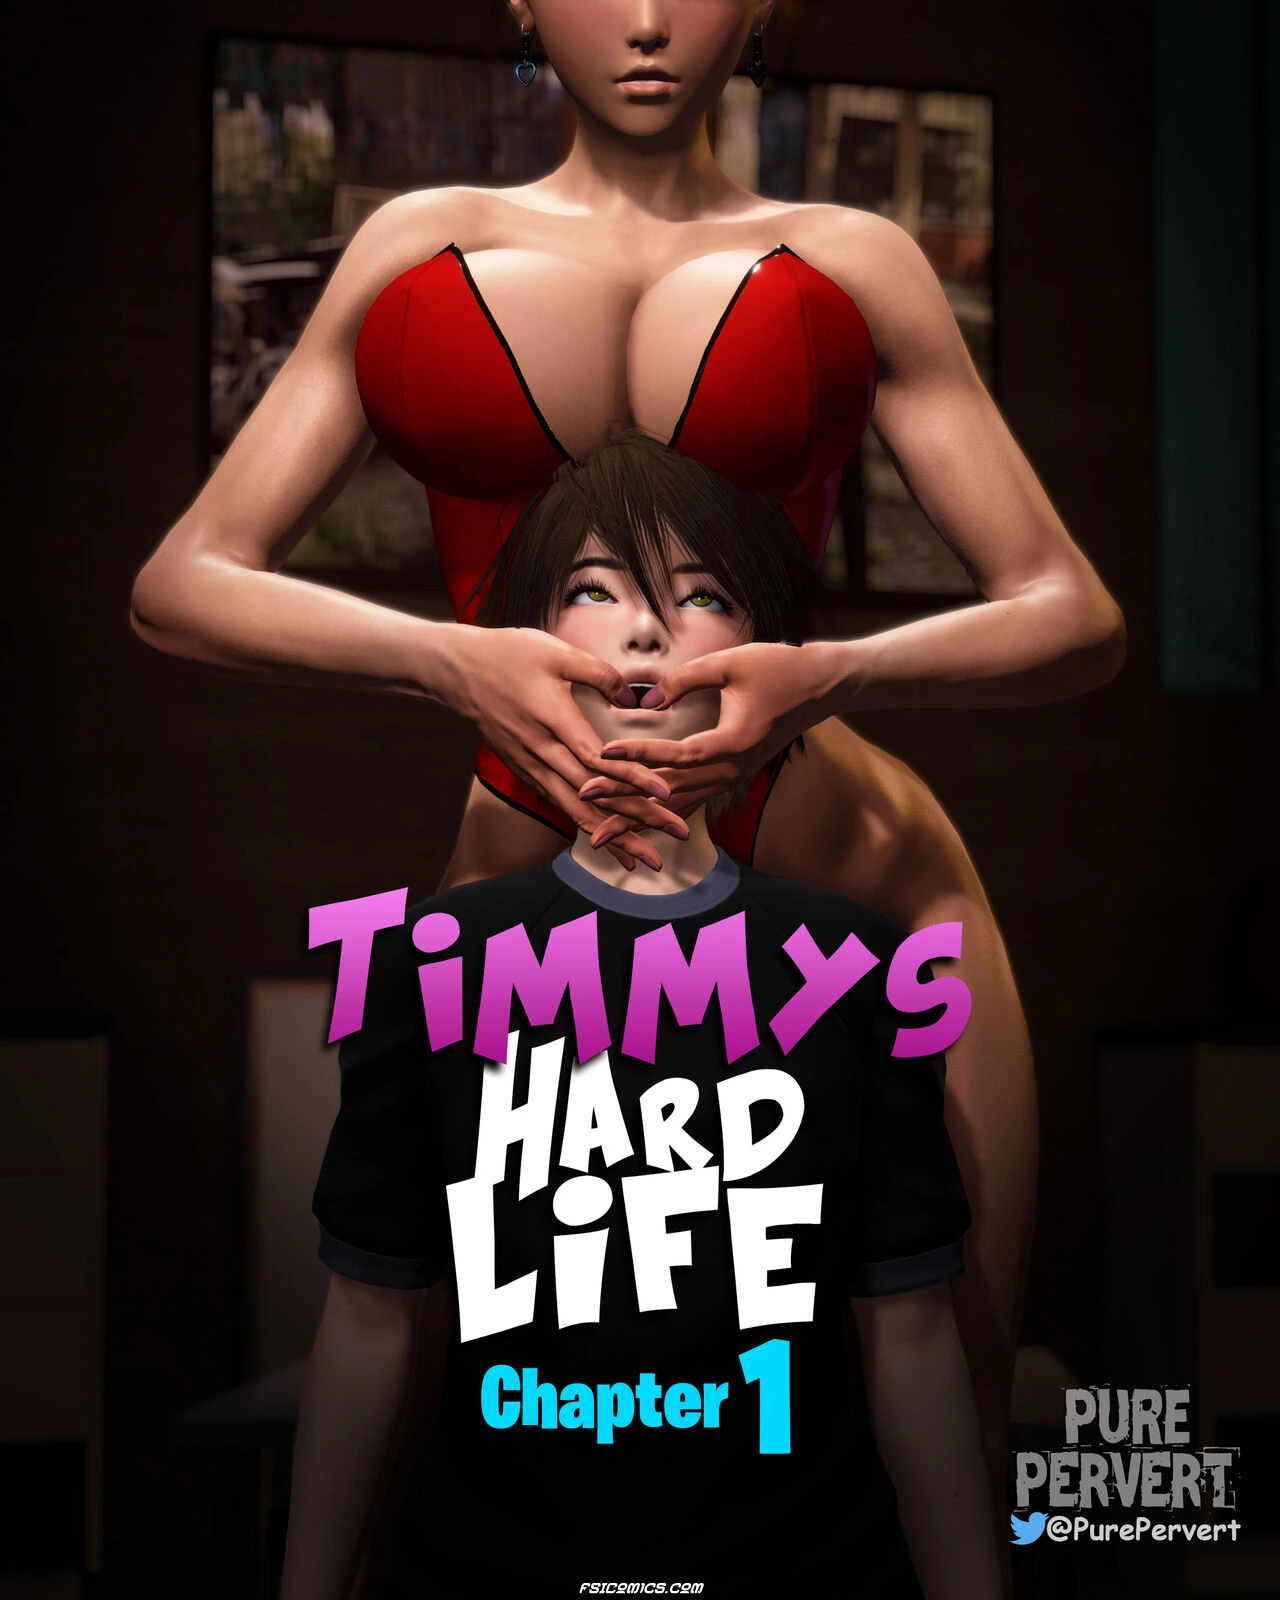 Timmy's Hard Life Chapter 1 - PurePervert - 43 - FSIComics